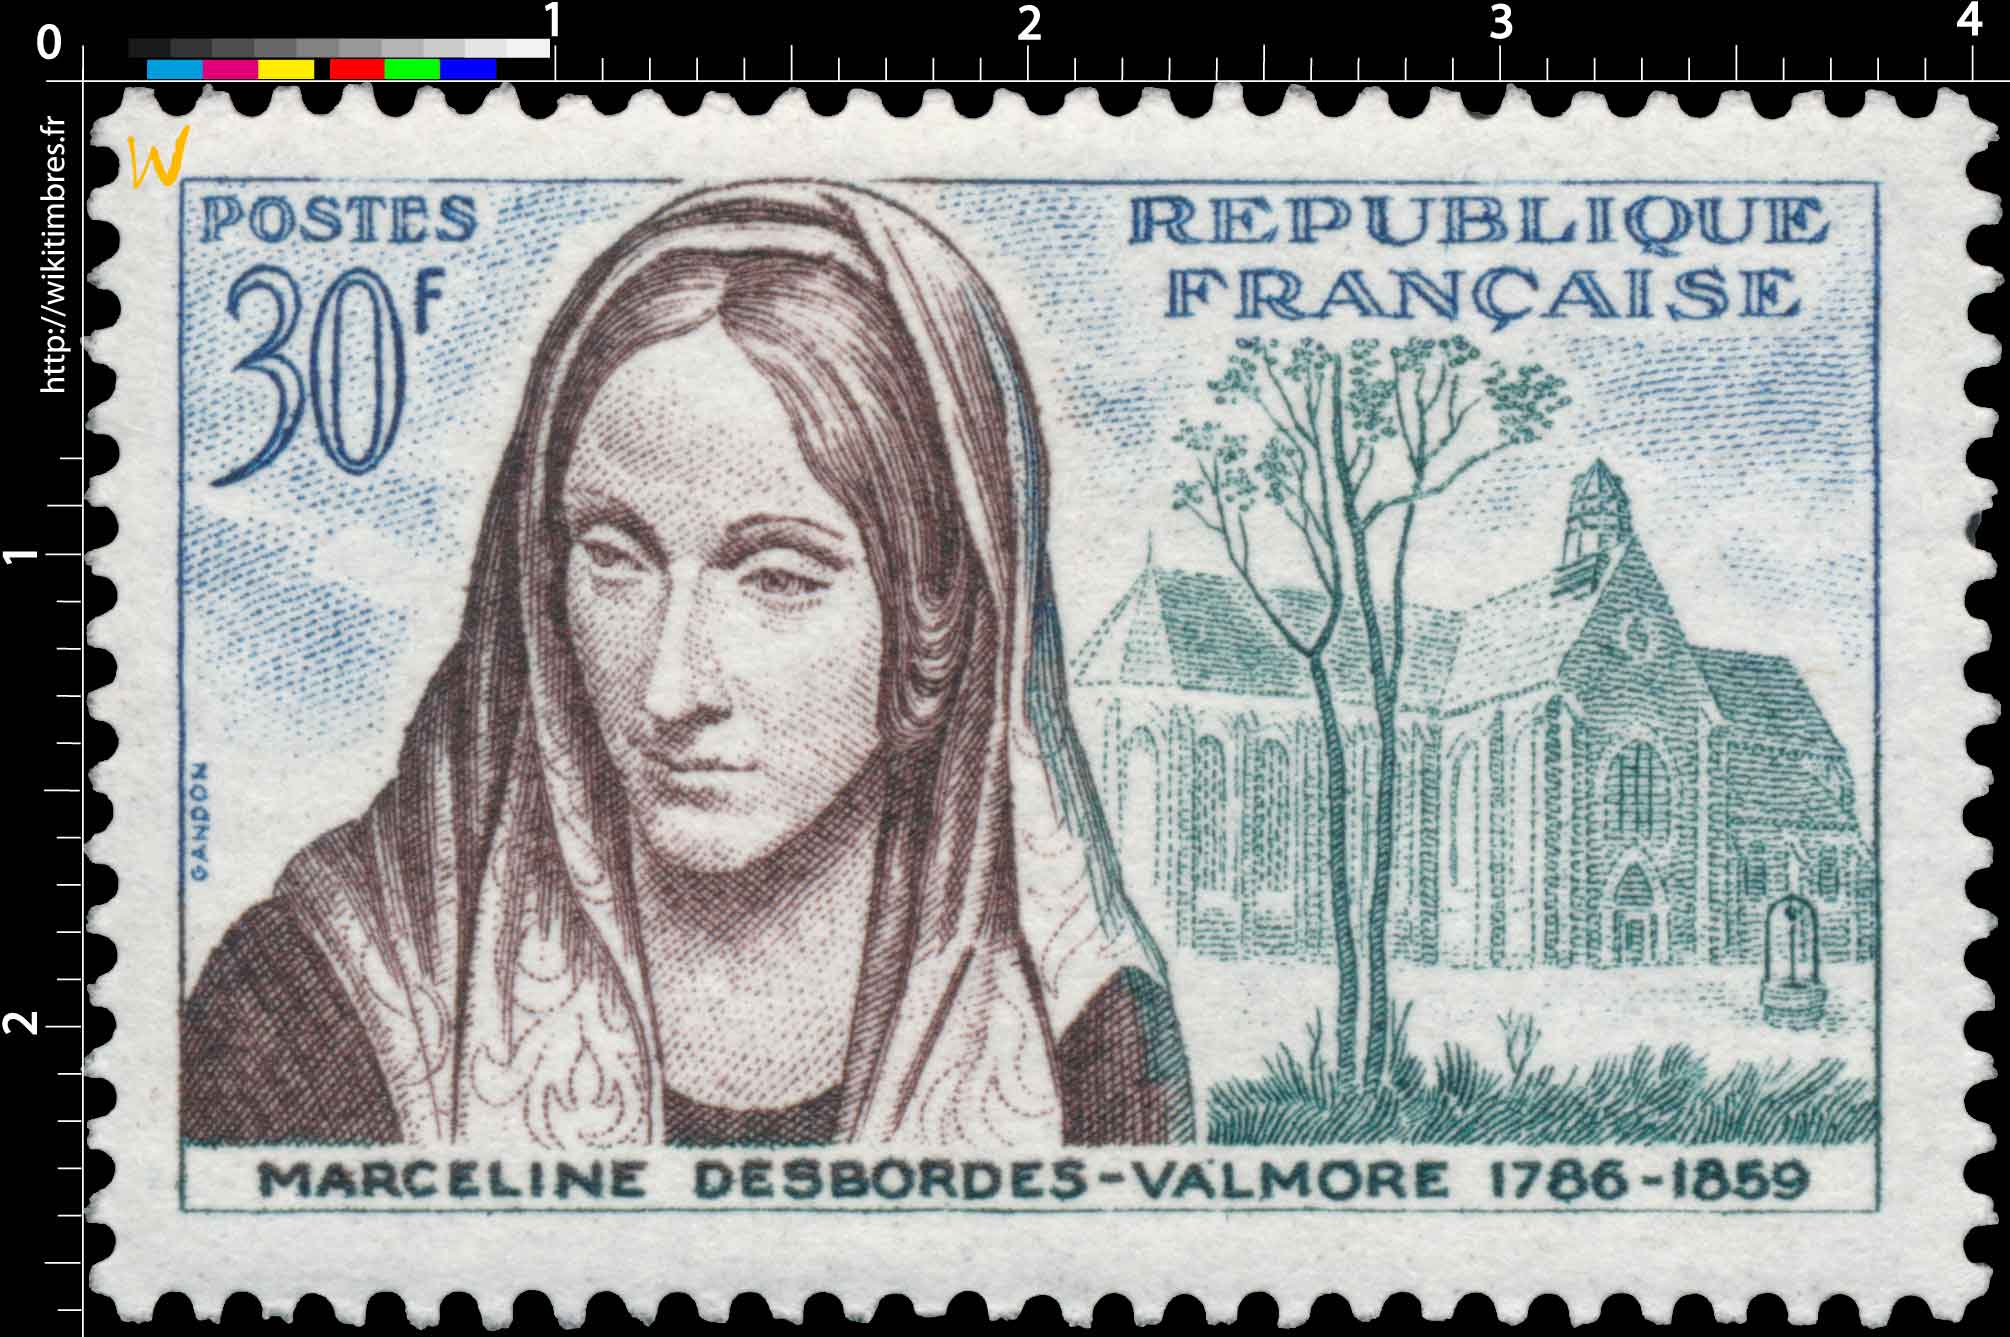 MARCELINE DESBORDES-VALMORE 1786-1859